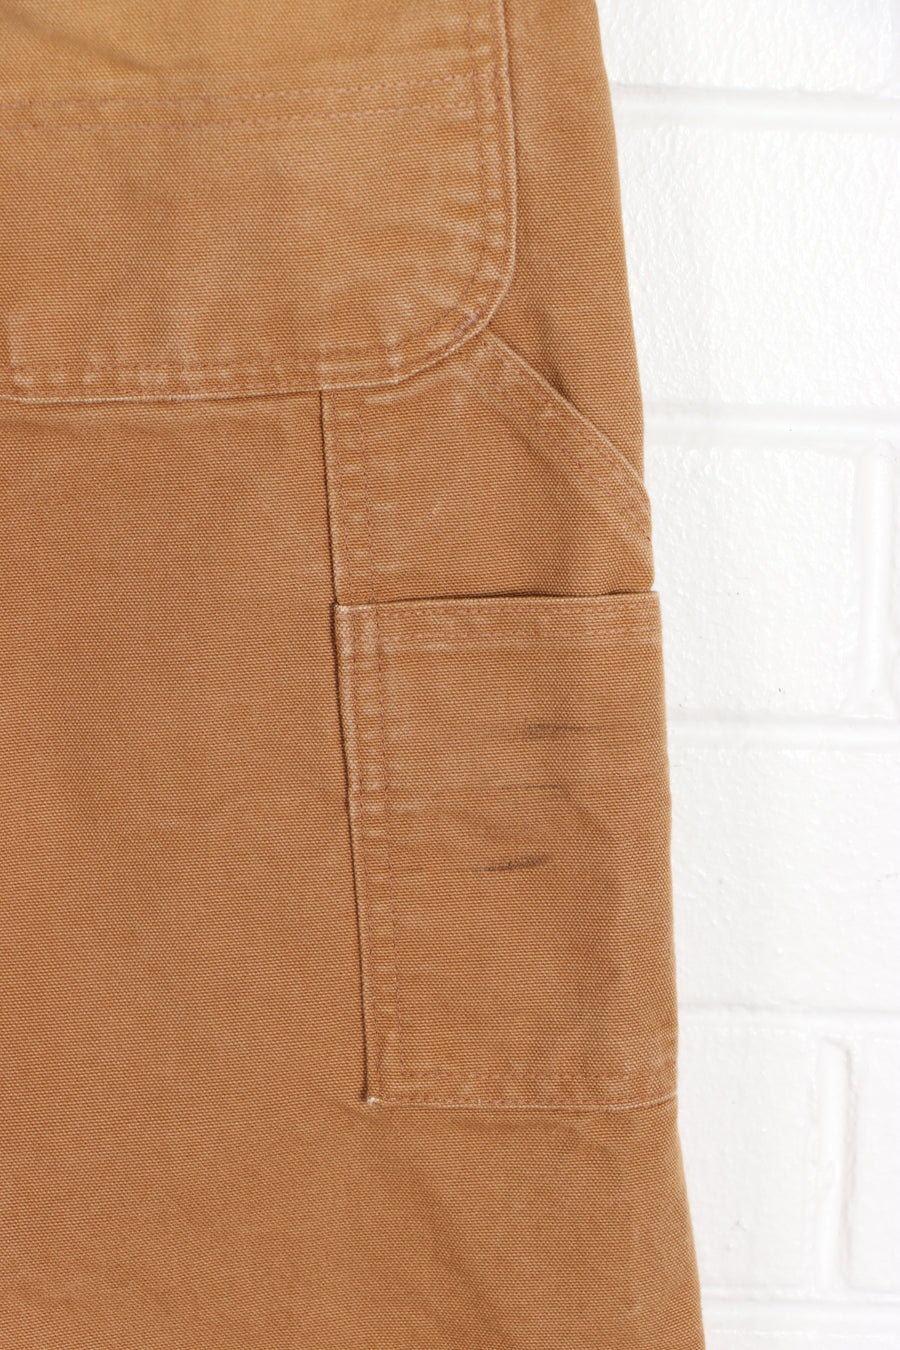 CARHARTT Tawny Brown Carpenter Workwear Pants (32x30) - Vintage Sole Melbourne